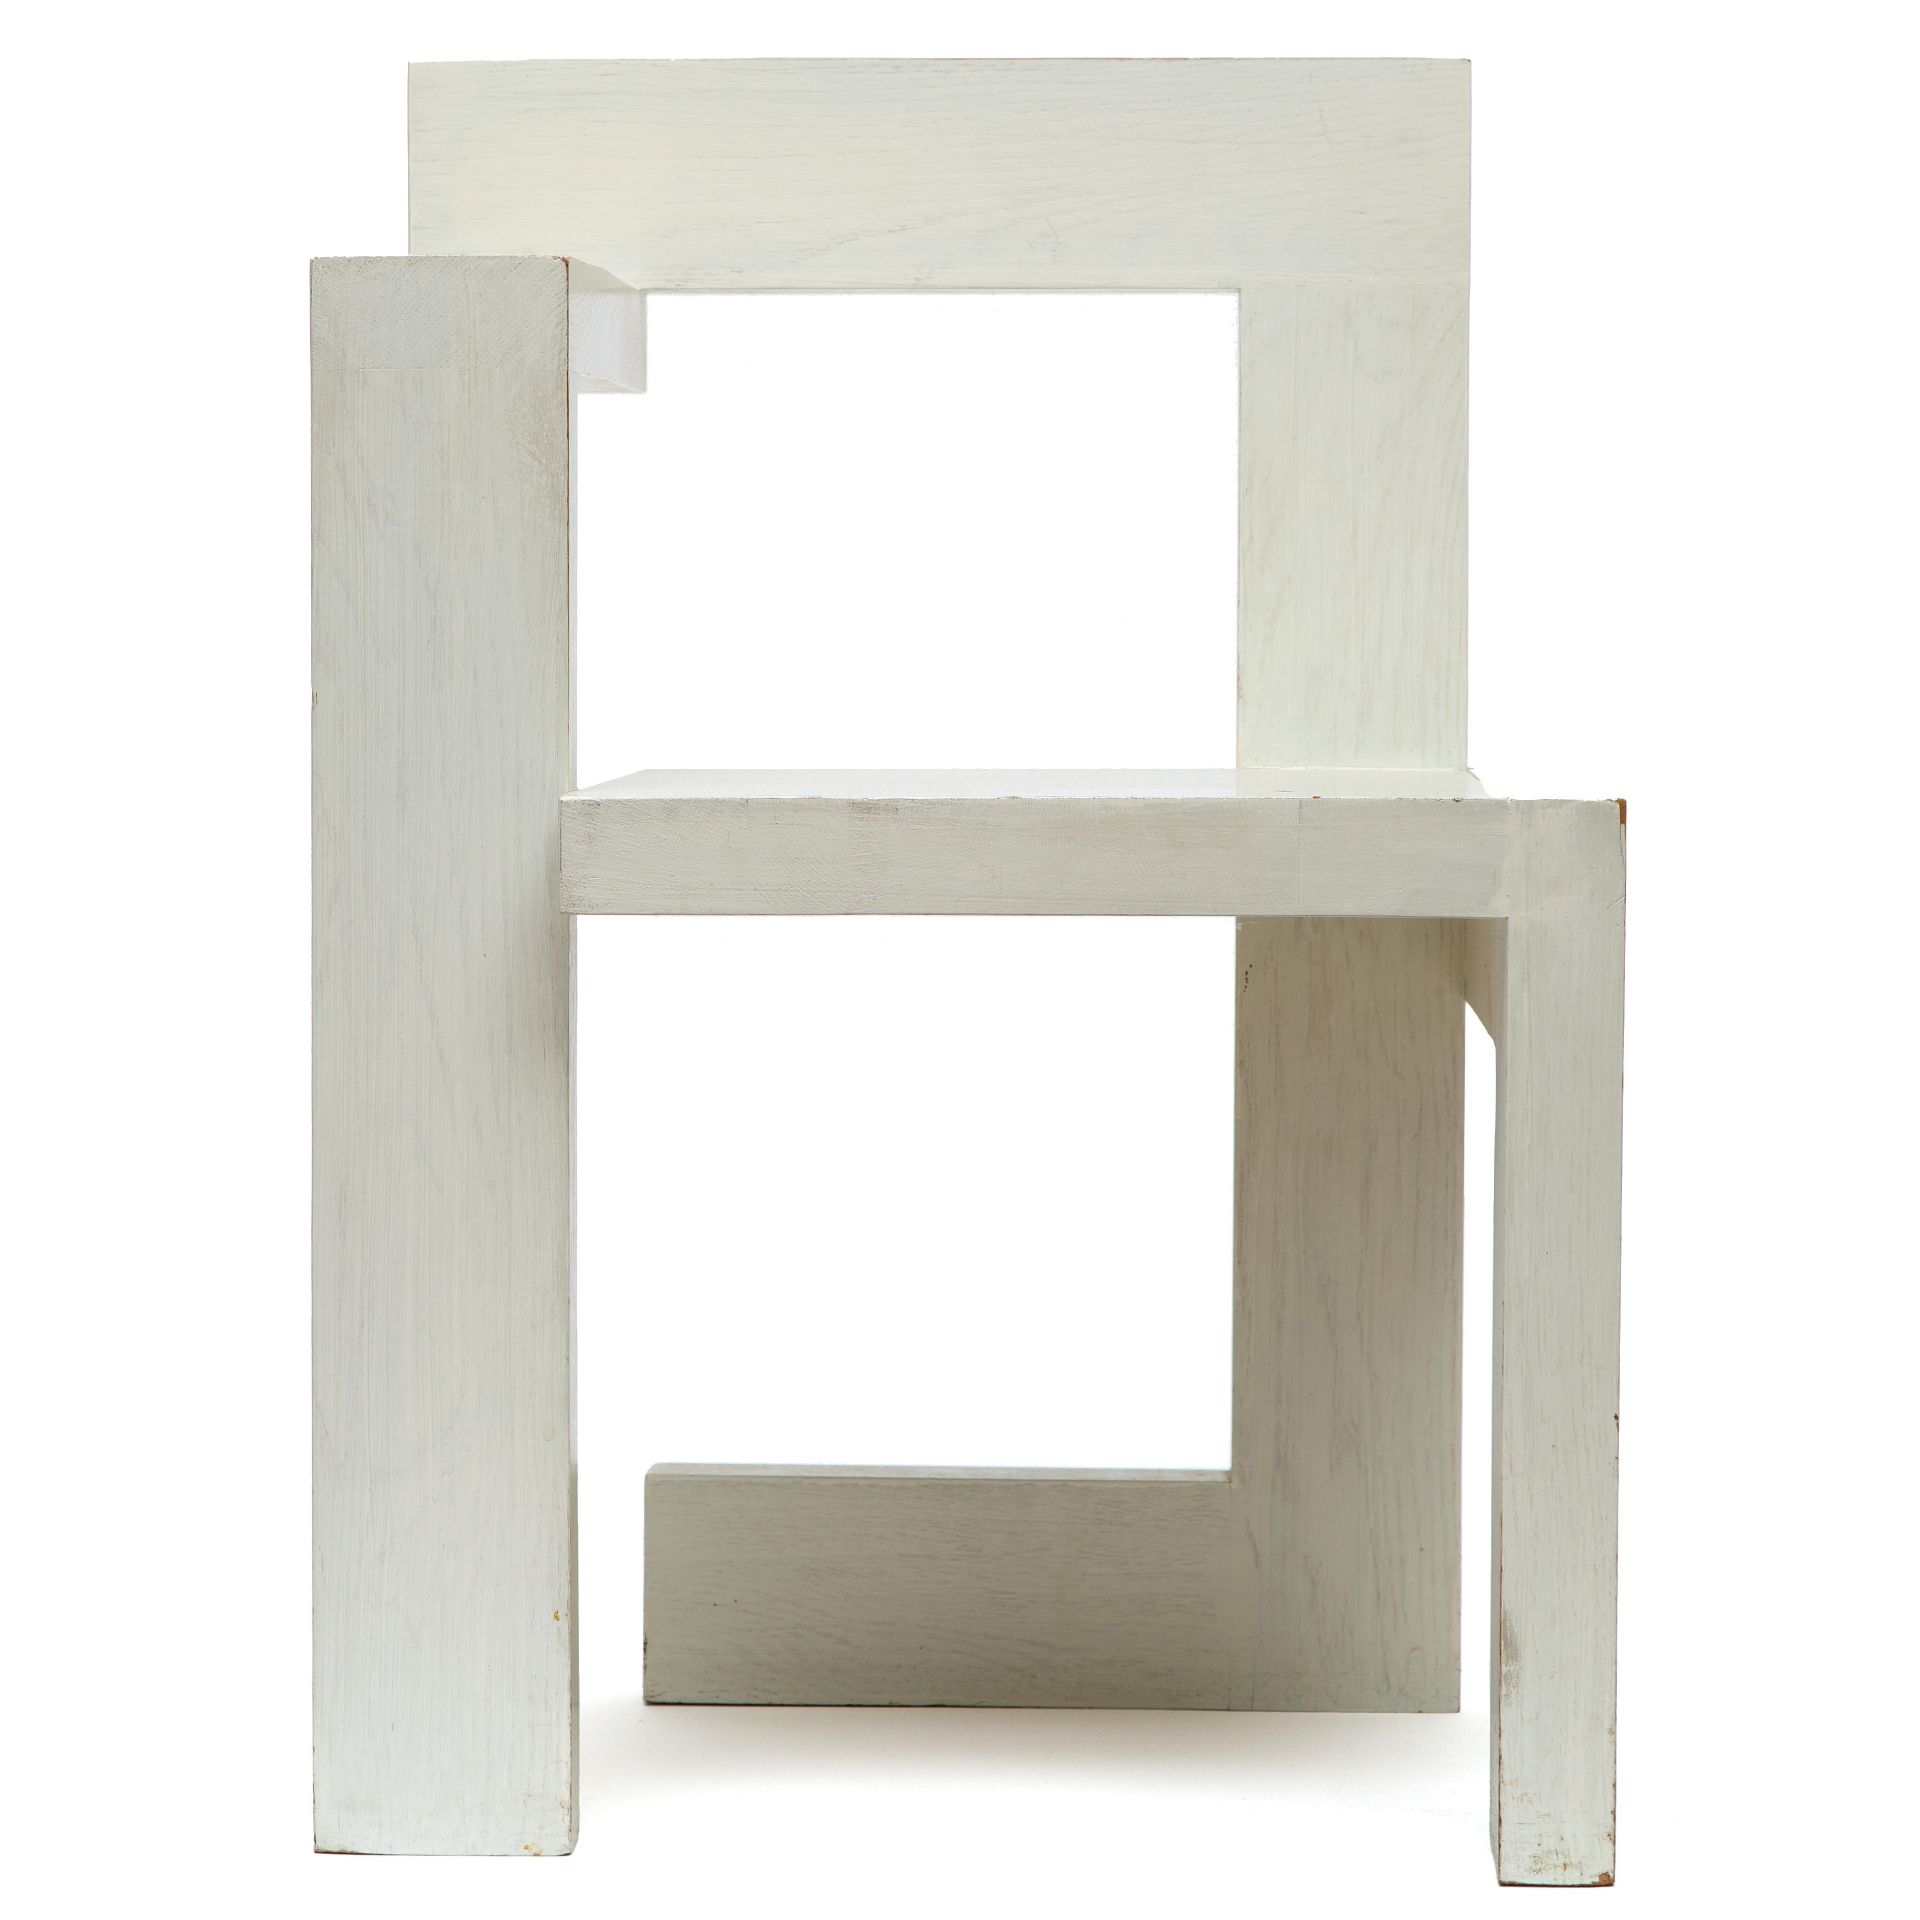 Gerrit Rietveld (1888-1964), Steltman stoel.